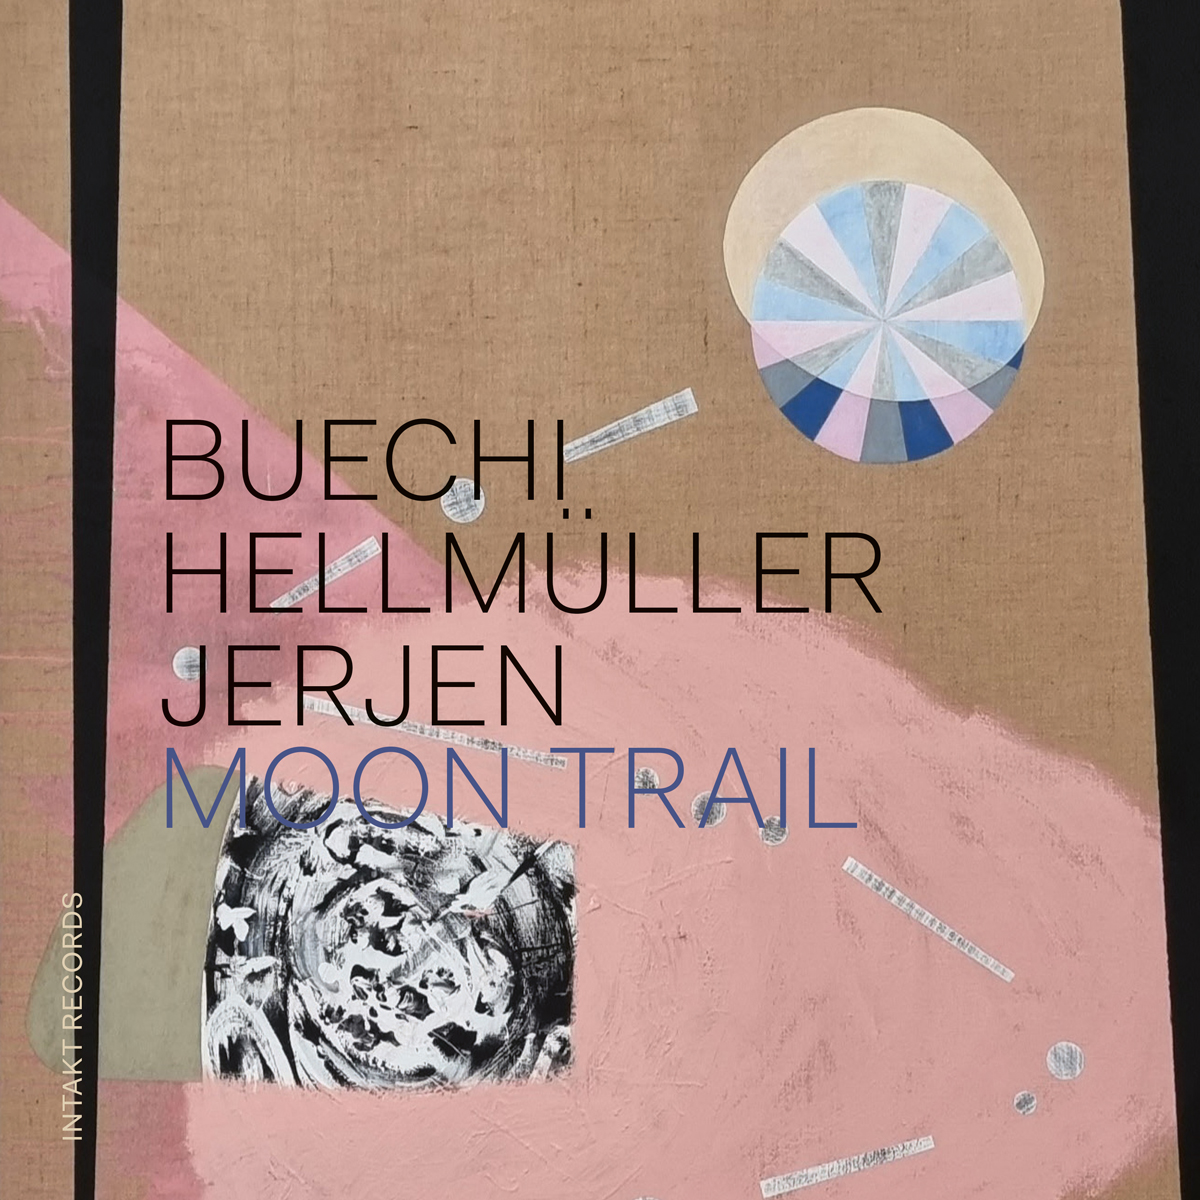 BUECHI – HELLMÜLLER – JERJEN
MOON TRAIL

Sarah Buechi: Voice
Franz Hellmüller: Guitar
Rafael Jerjen: Bass

Intakt CD 390 / 2022